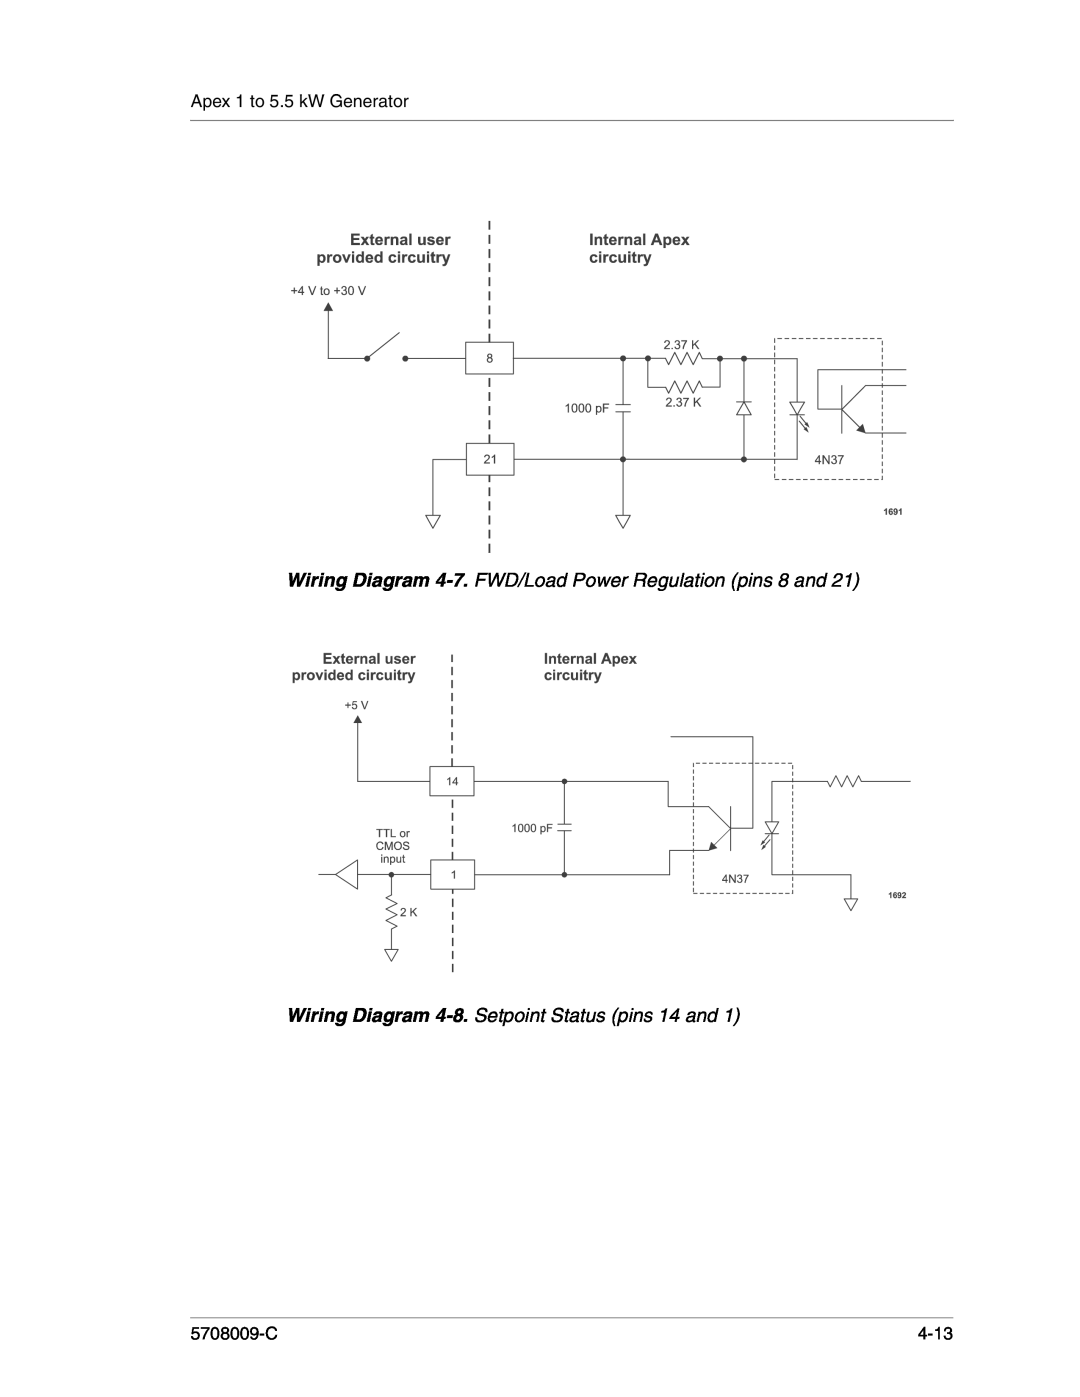 Apex Digital 5708009-C manual Wiring Diagram 4-7. FWD/Load Power Regulation pins 8 and, Apex 1 to 5.5 kW Generator, 4-13 